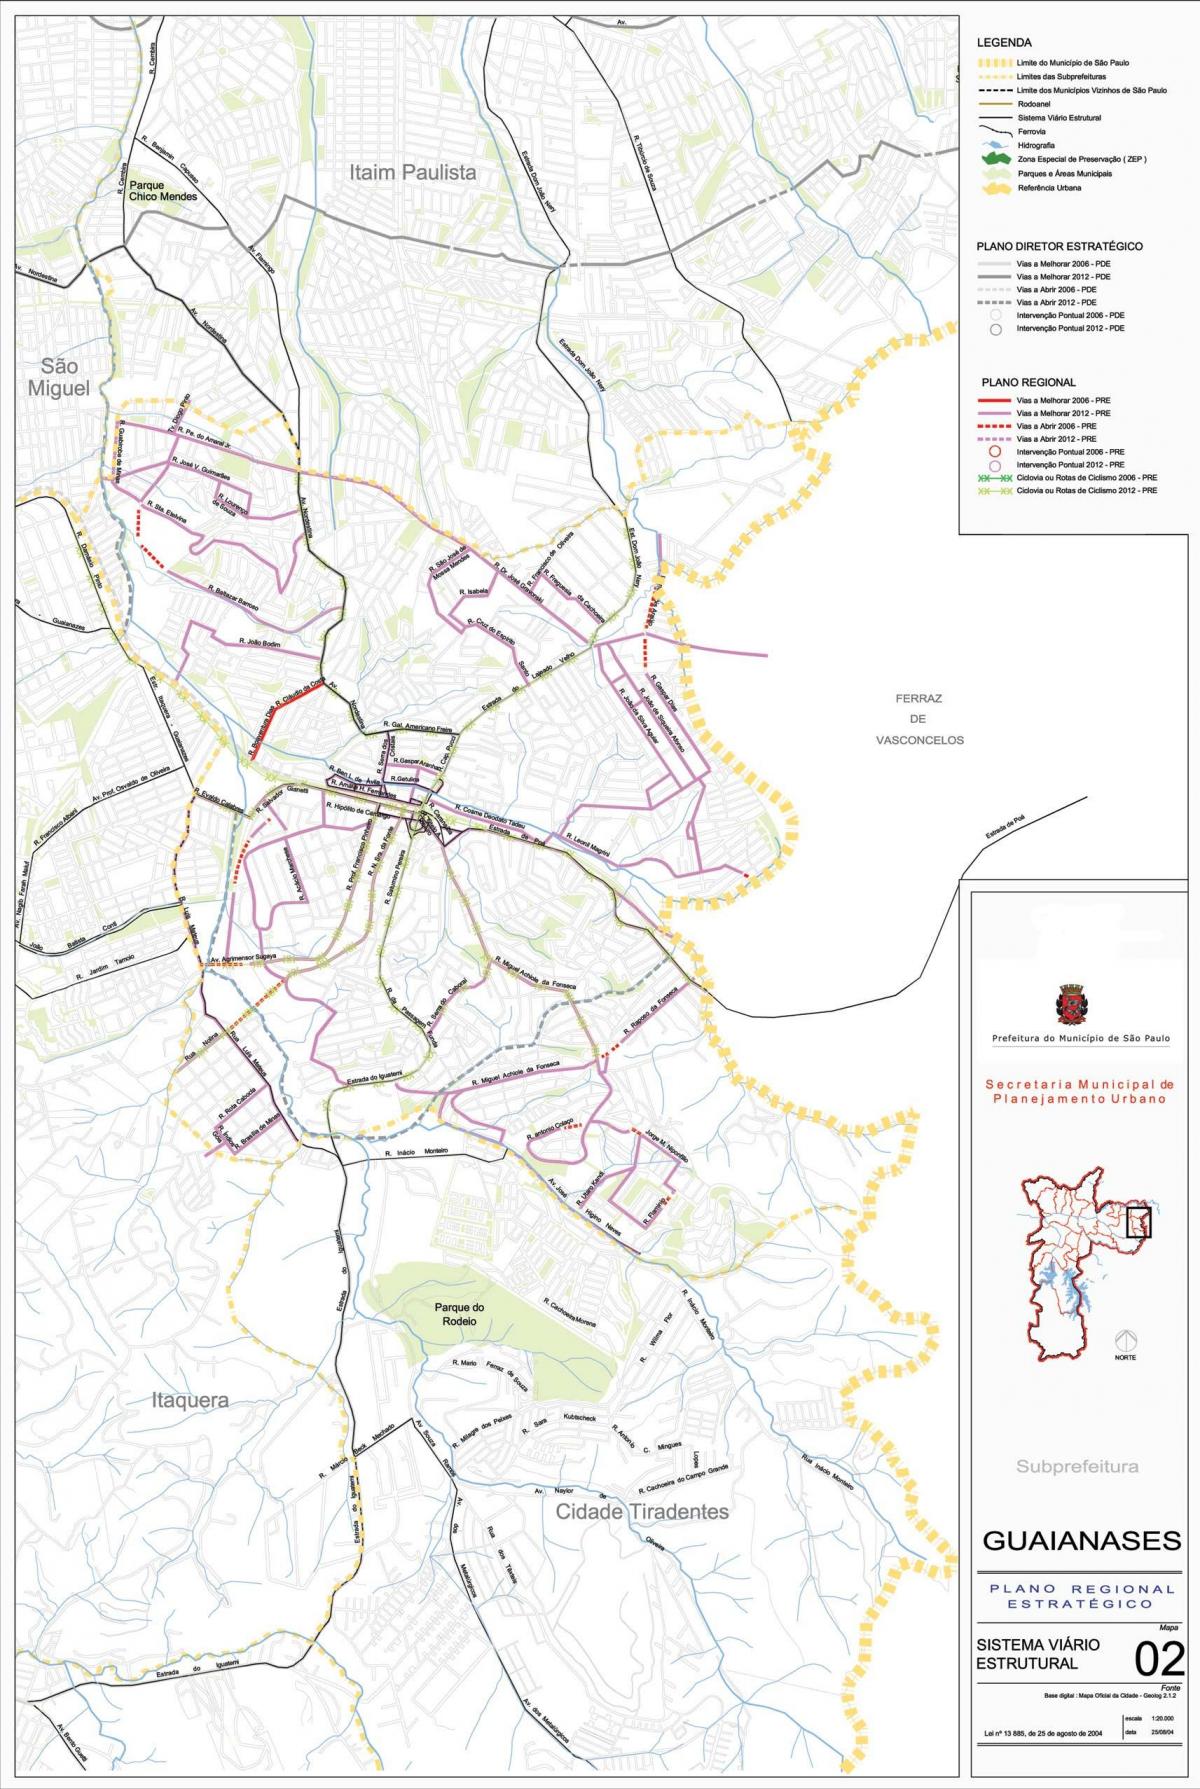 Térkép Guaianases São Paulo - Utak